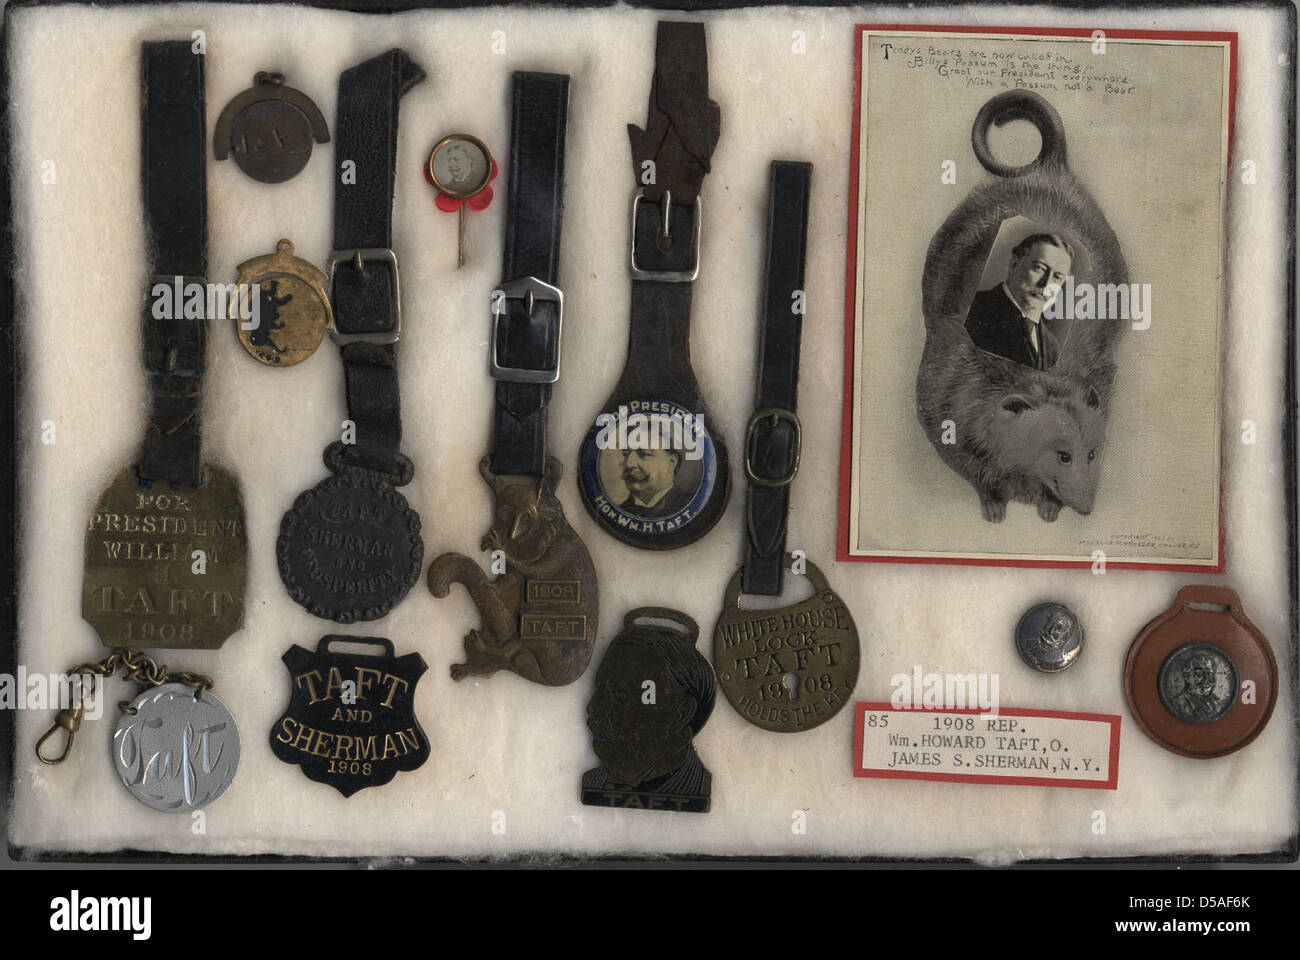 Taft-Sherman Campaign Items, ca. 1908 Stock Photo